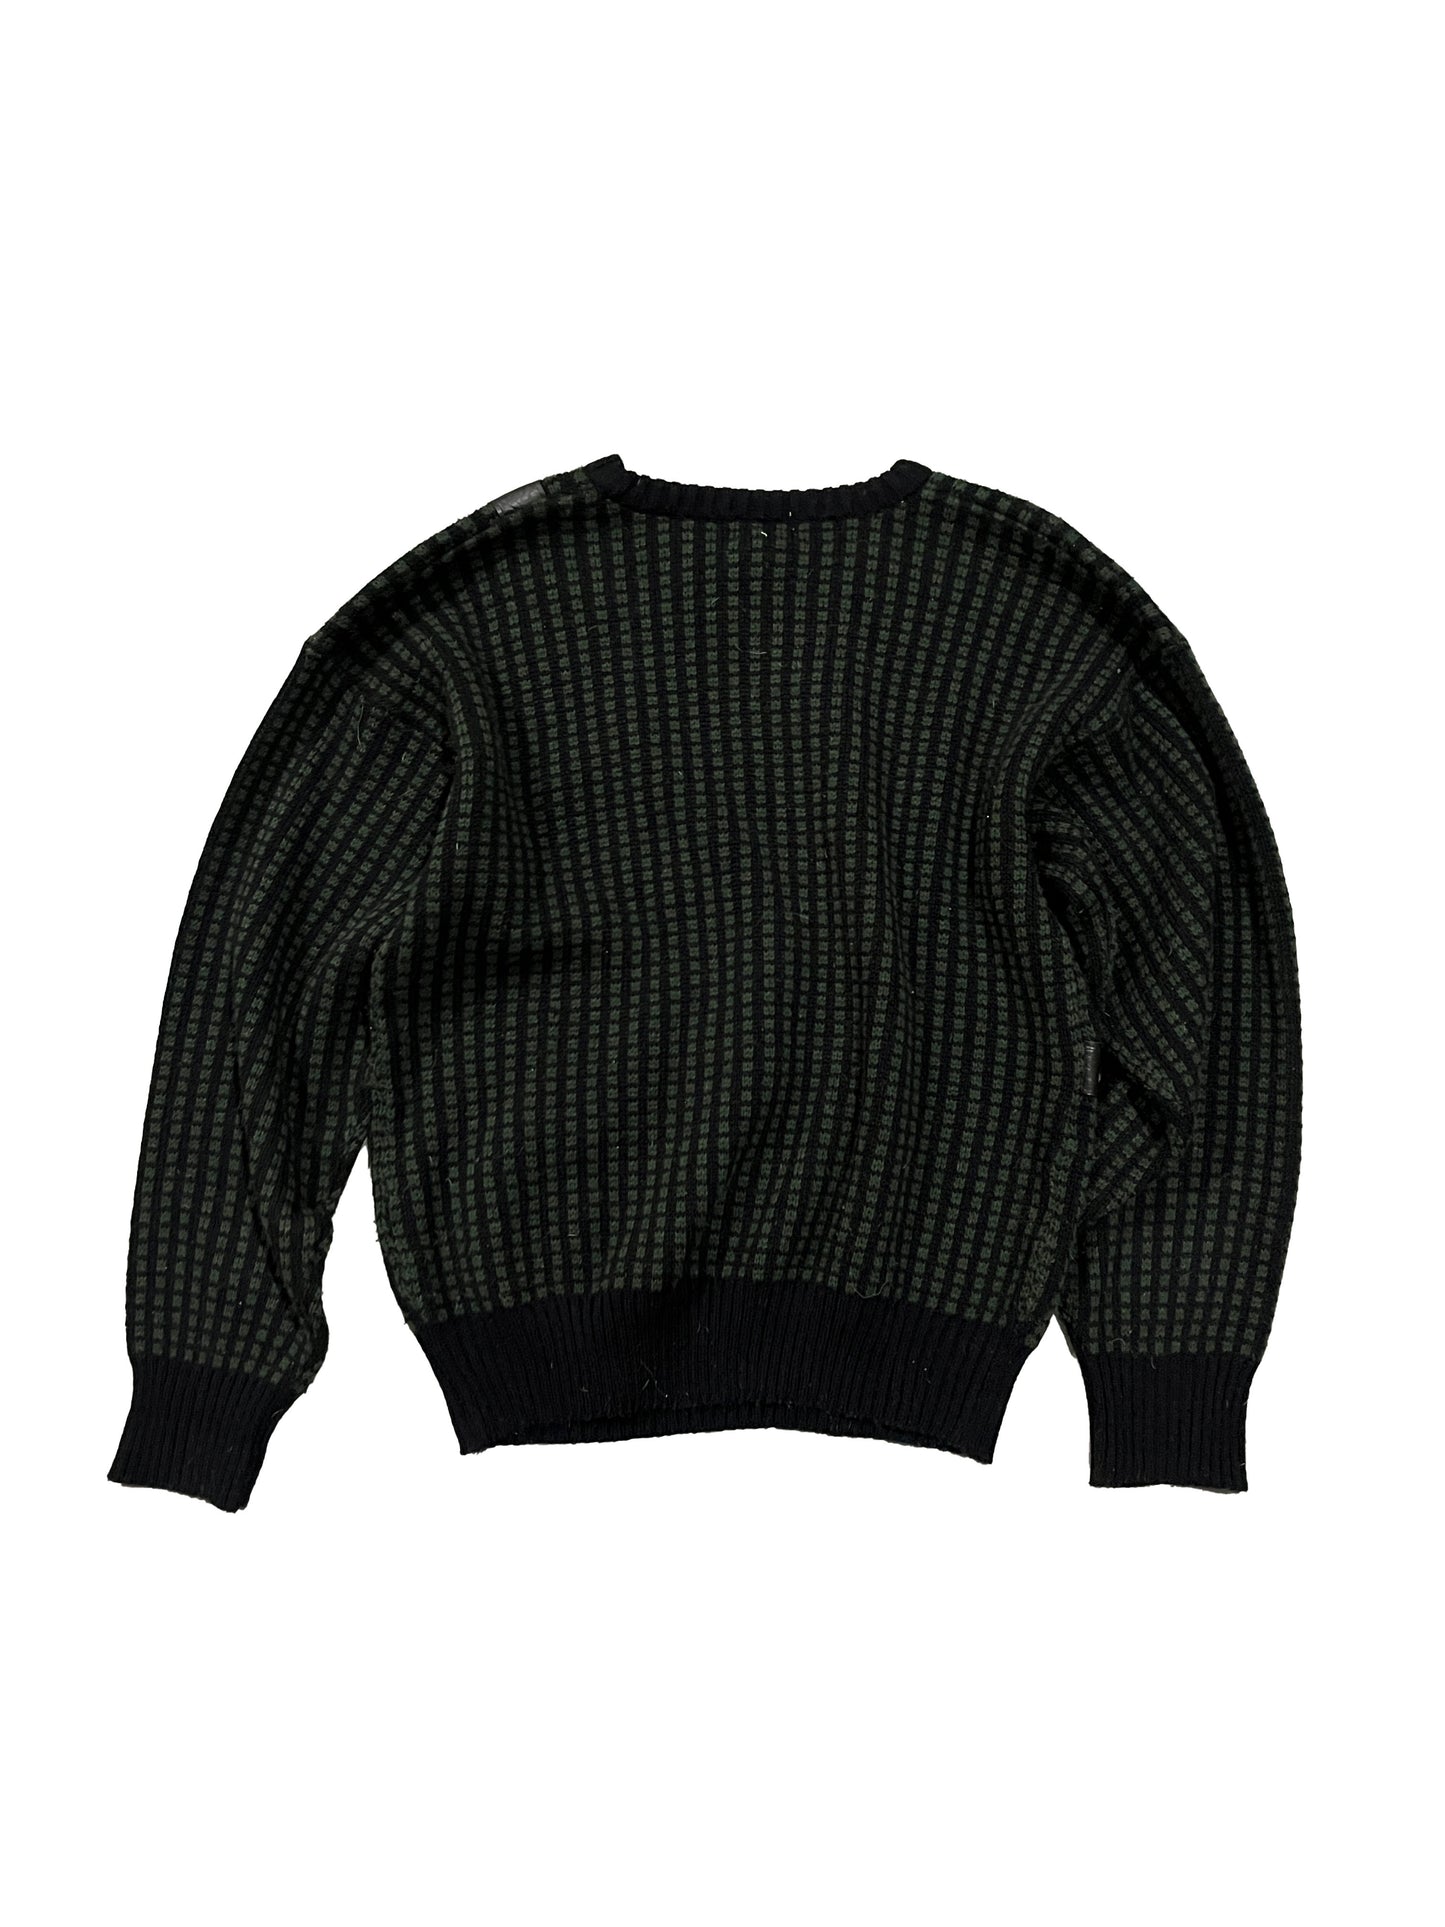 Vintage "Luciano Divanni" Knit Sweater